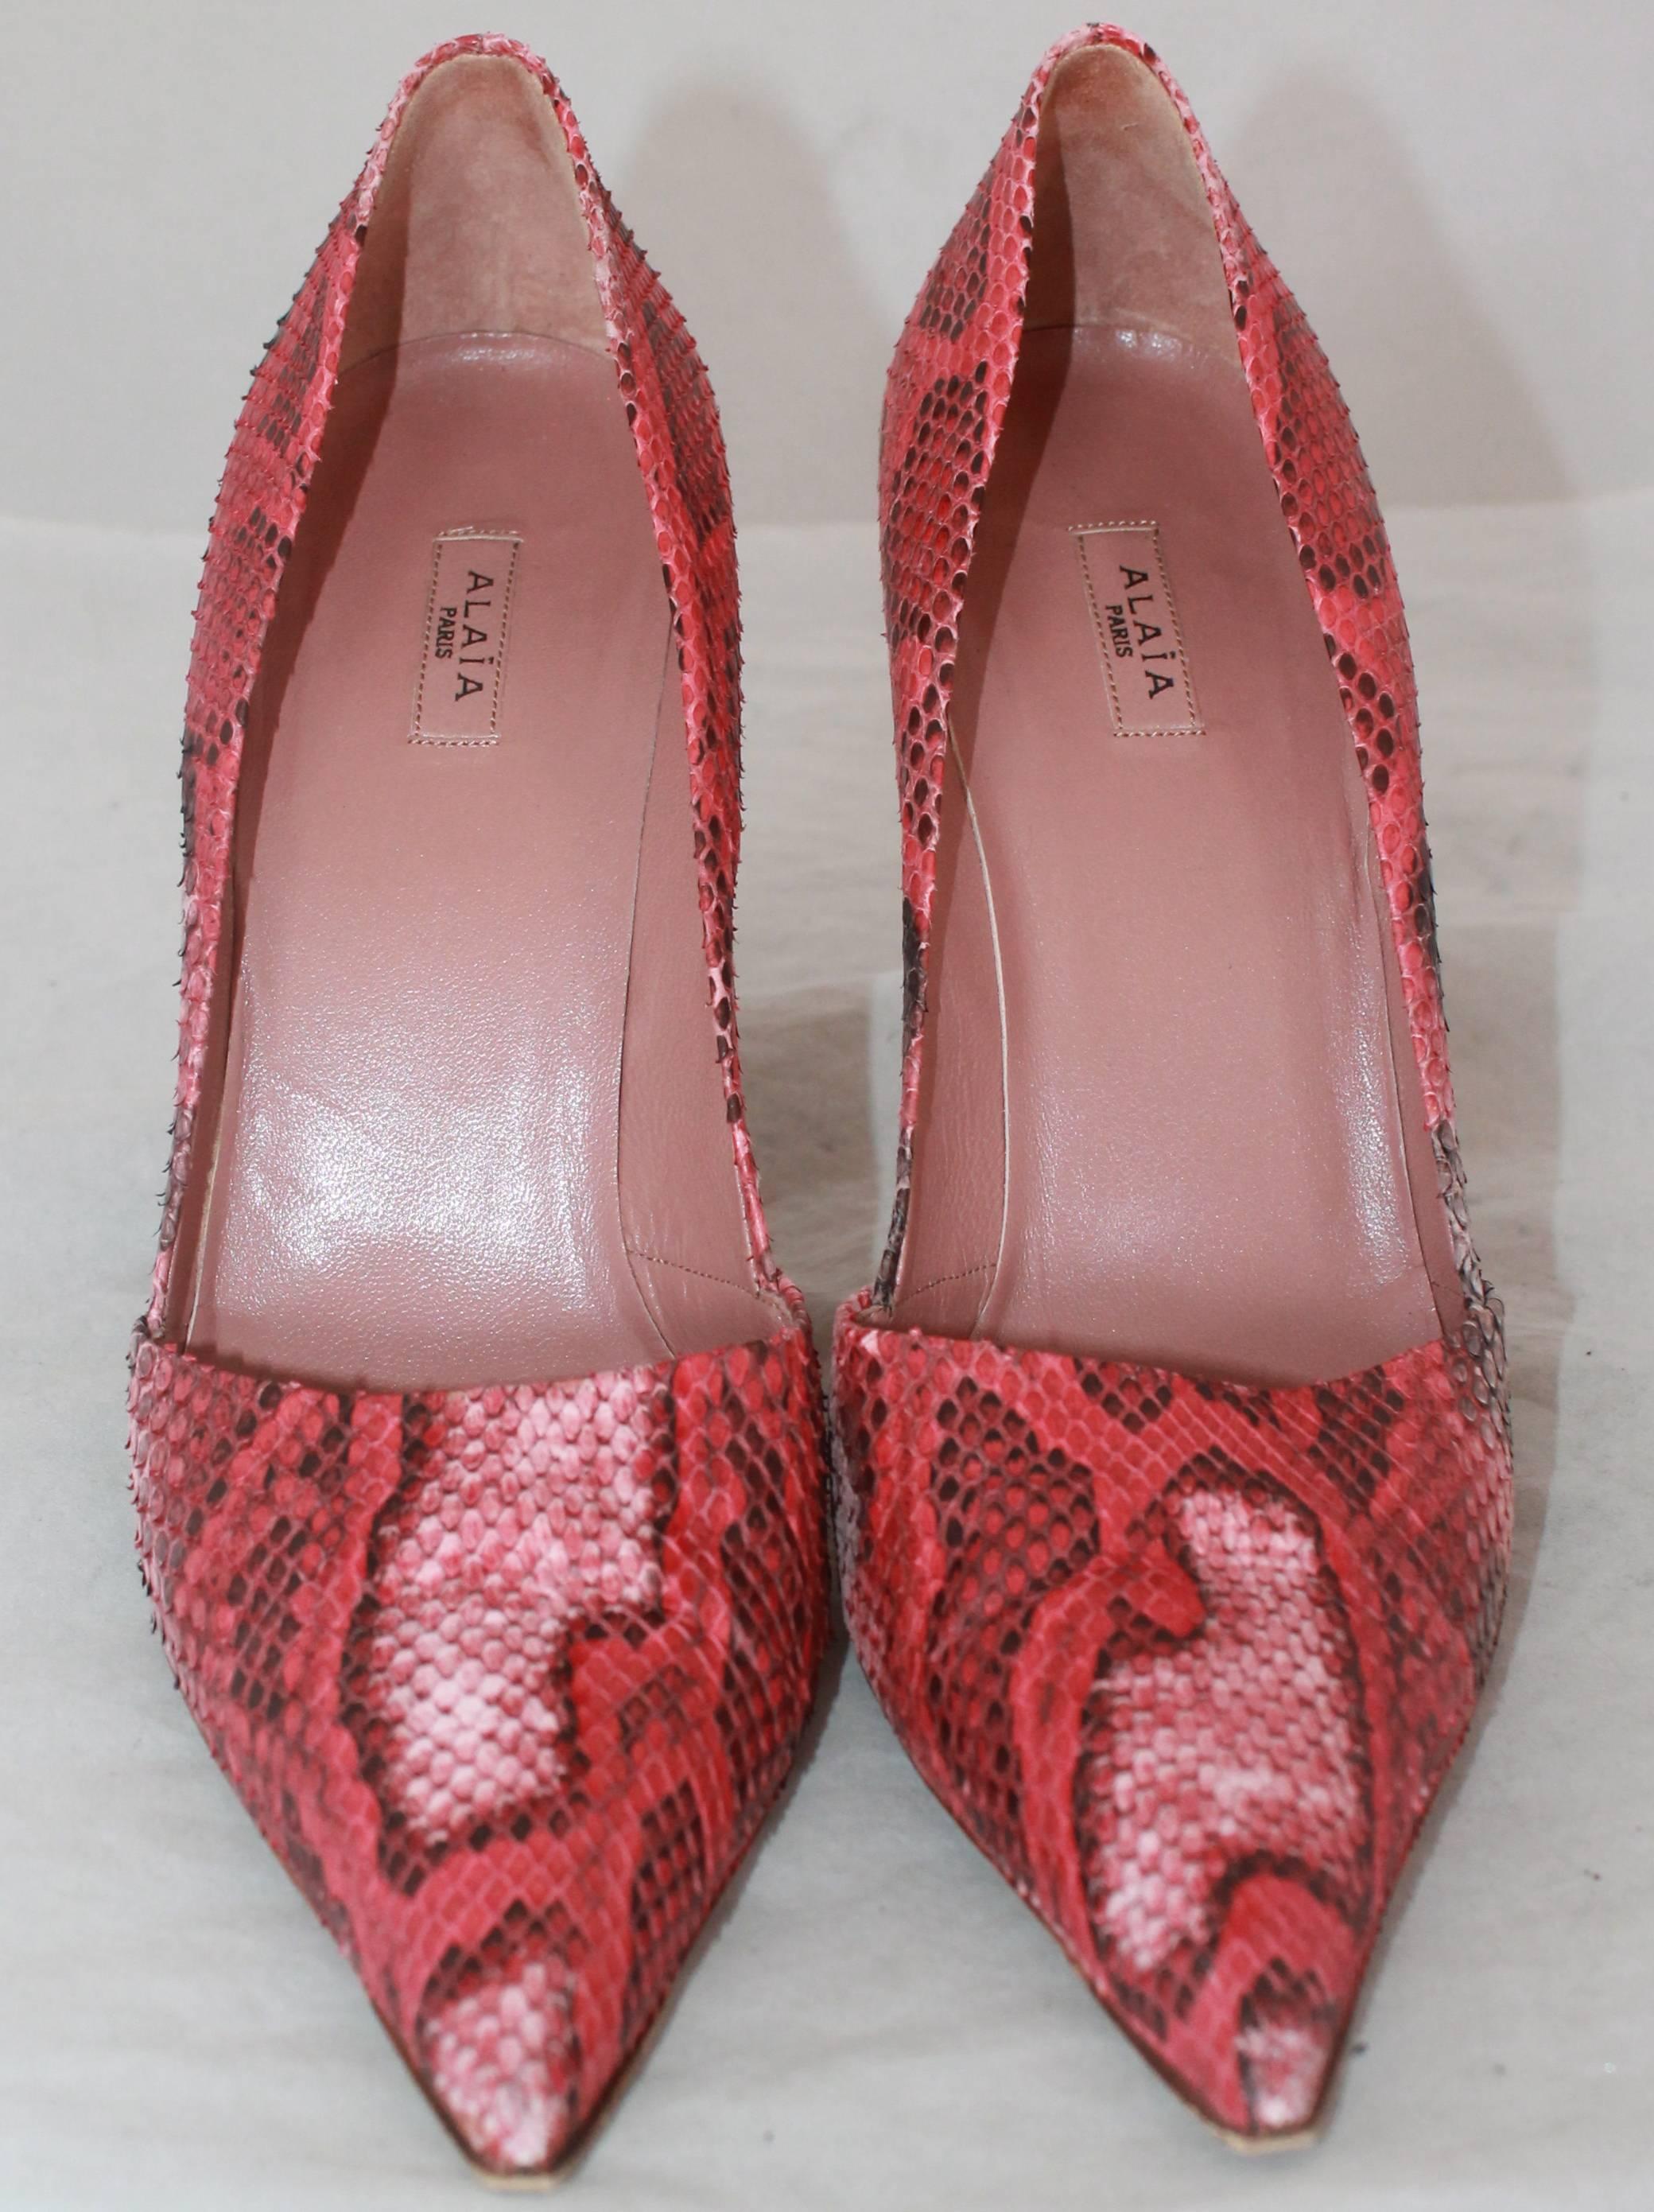 red and black snakeskin heels